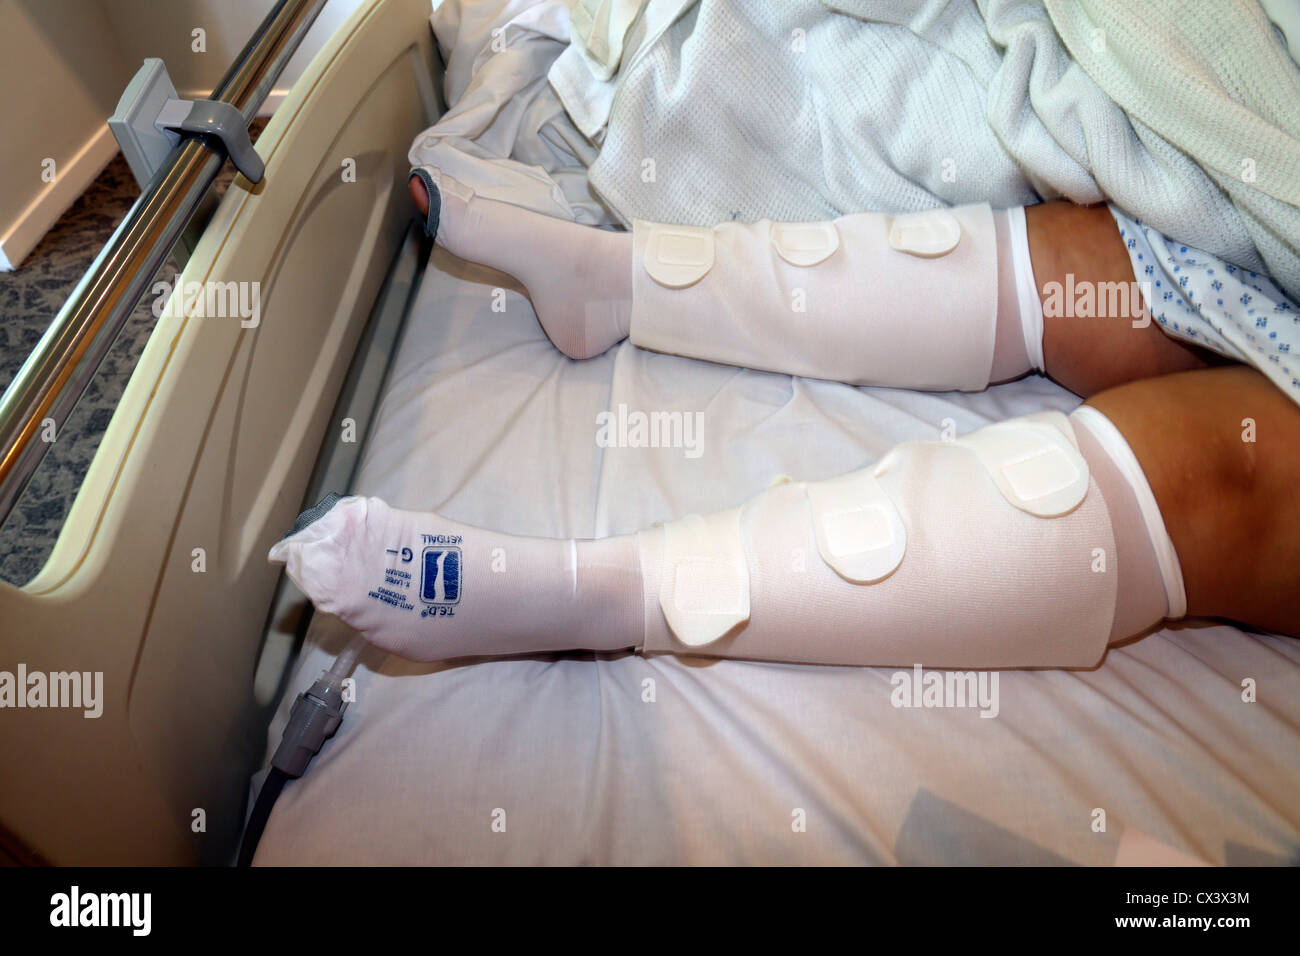 https://c8.alamy.com/comp/CX3X3M/woman-wearing-anti-embolism-stockings-in-hospital-bed-ashtead-surrey-CX3X3M.jpg